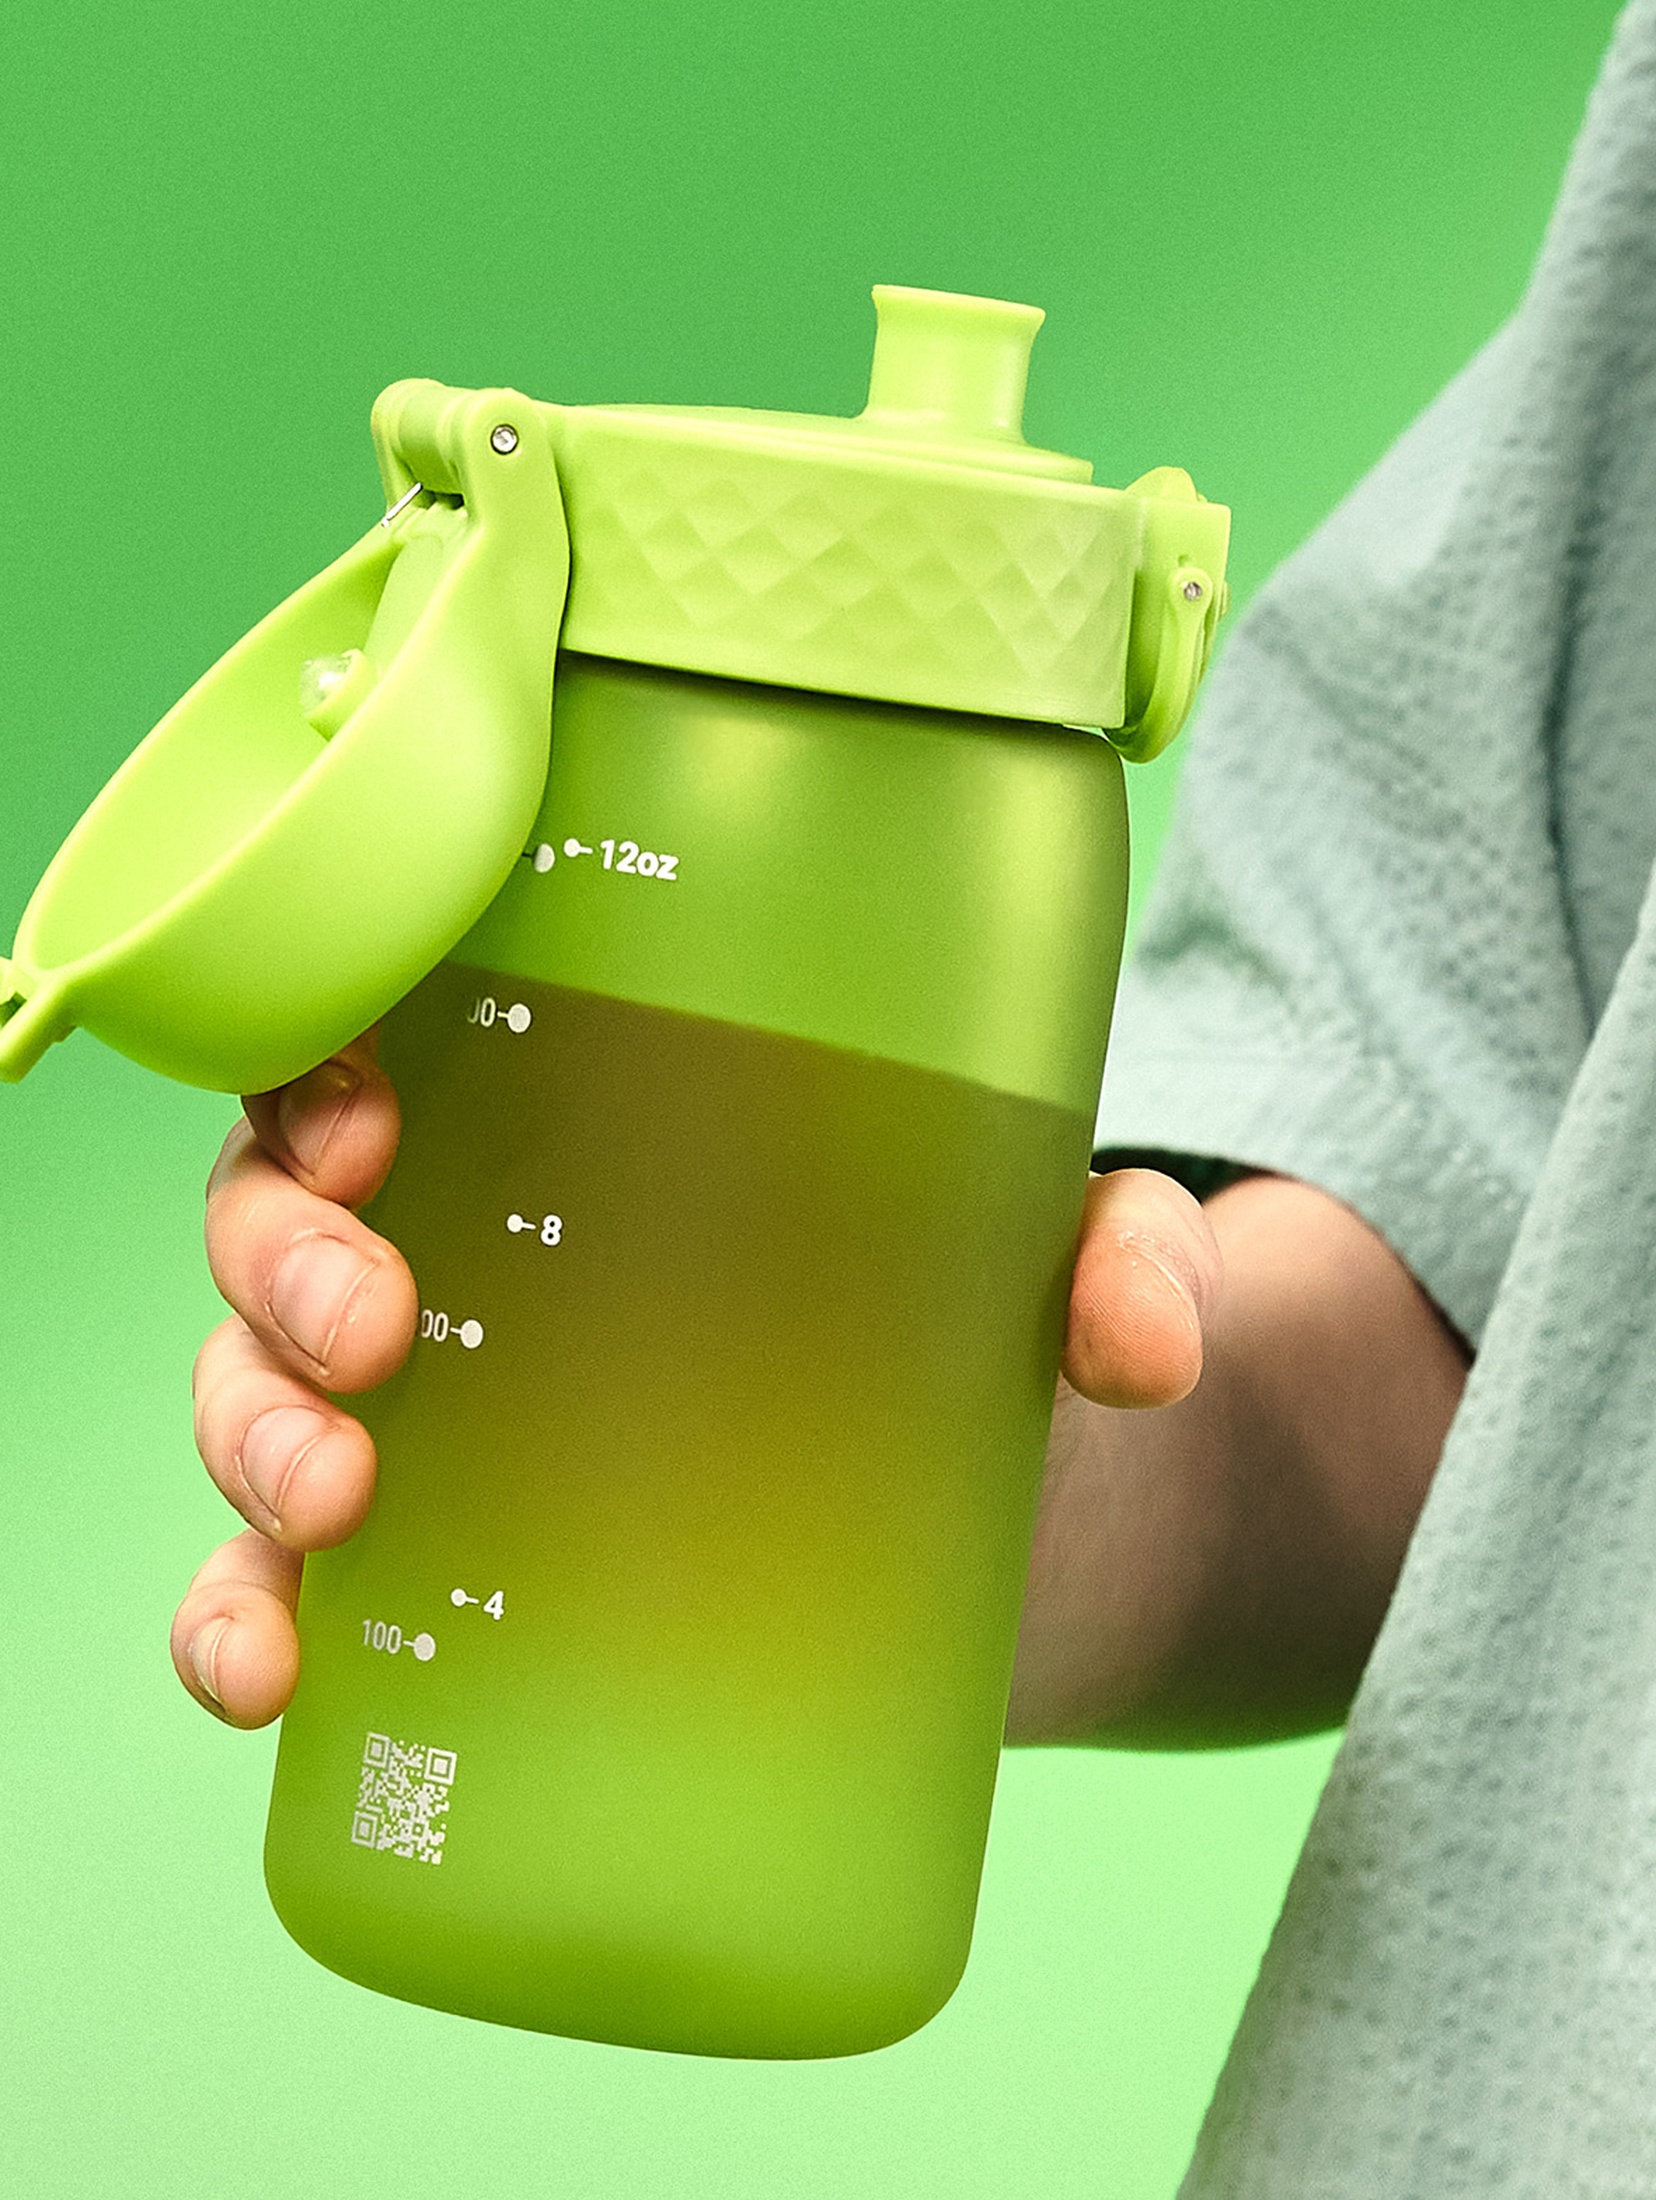 Butelka na wodę ION8 BPA Free Green 350ml - zielona